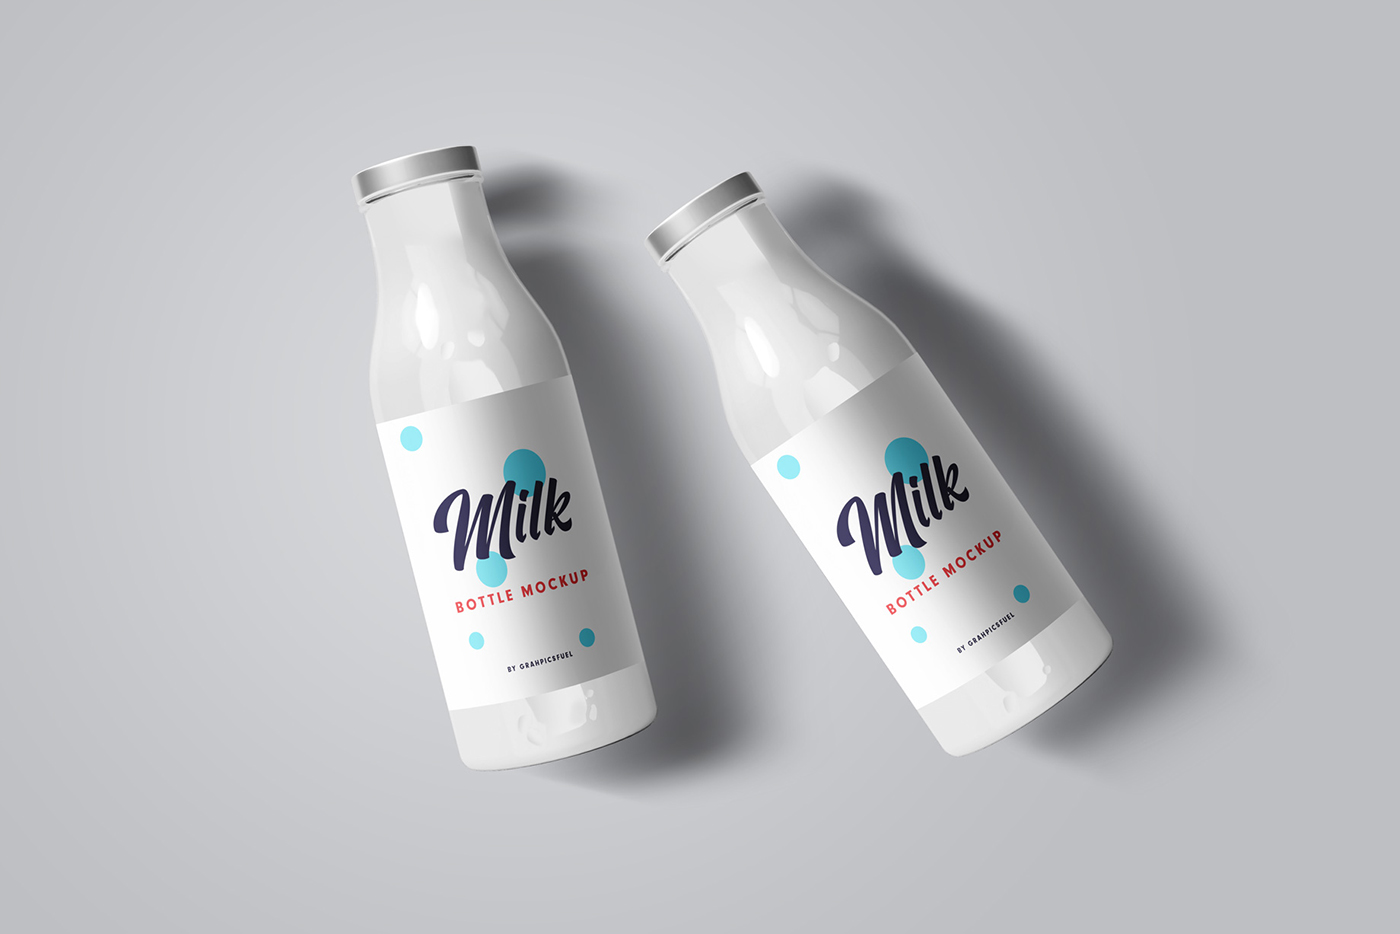 https://www.graphicsfuel.com/wp-content/uploads/2020/07/Milk-Bottle-Mockup-04.jpg